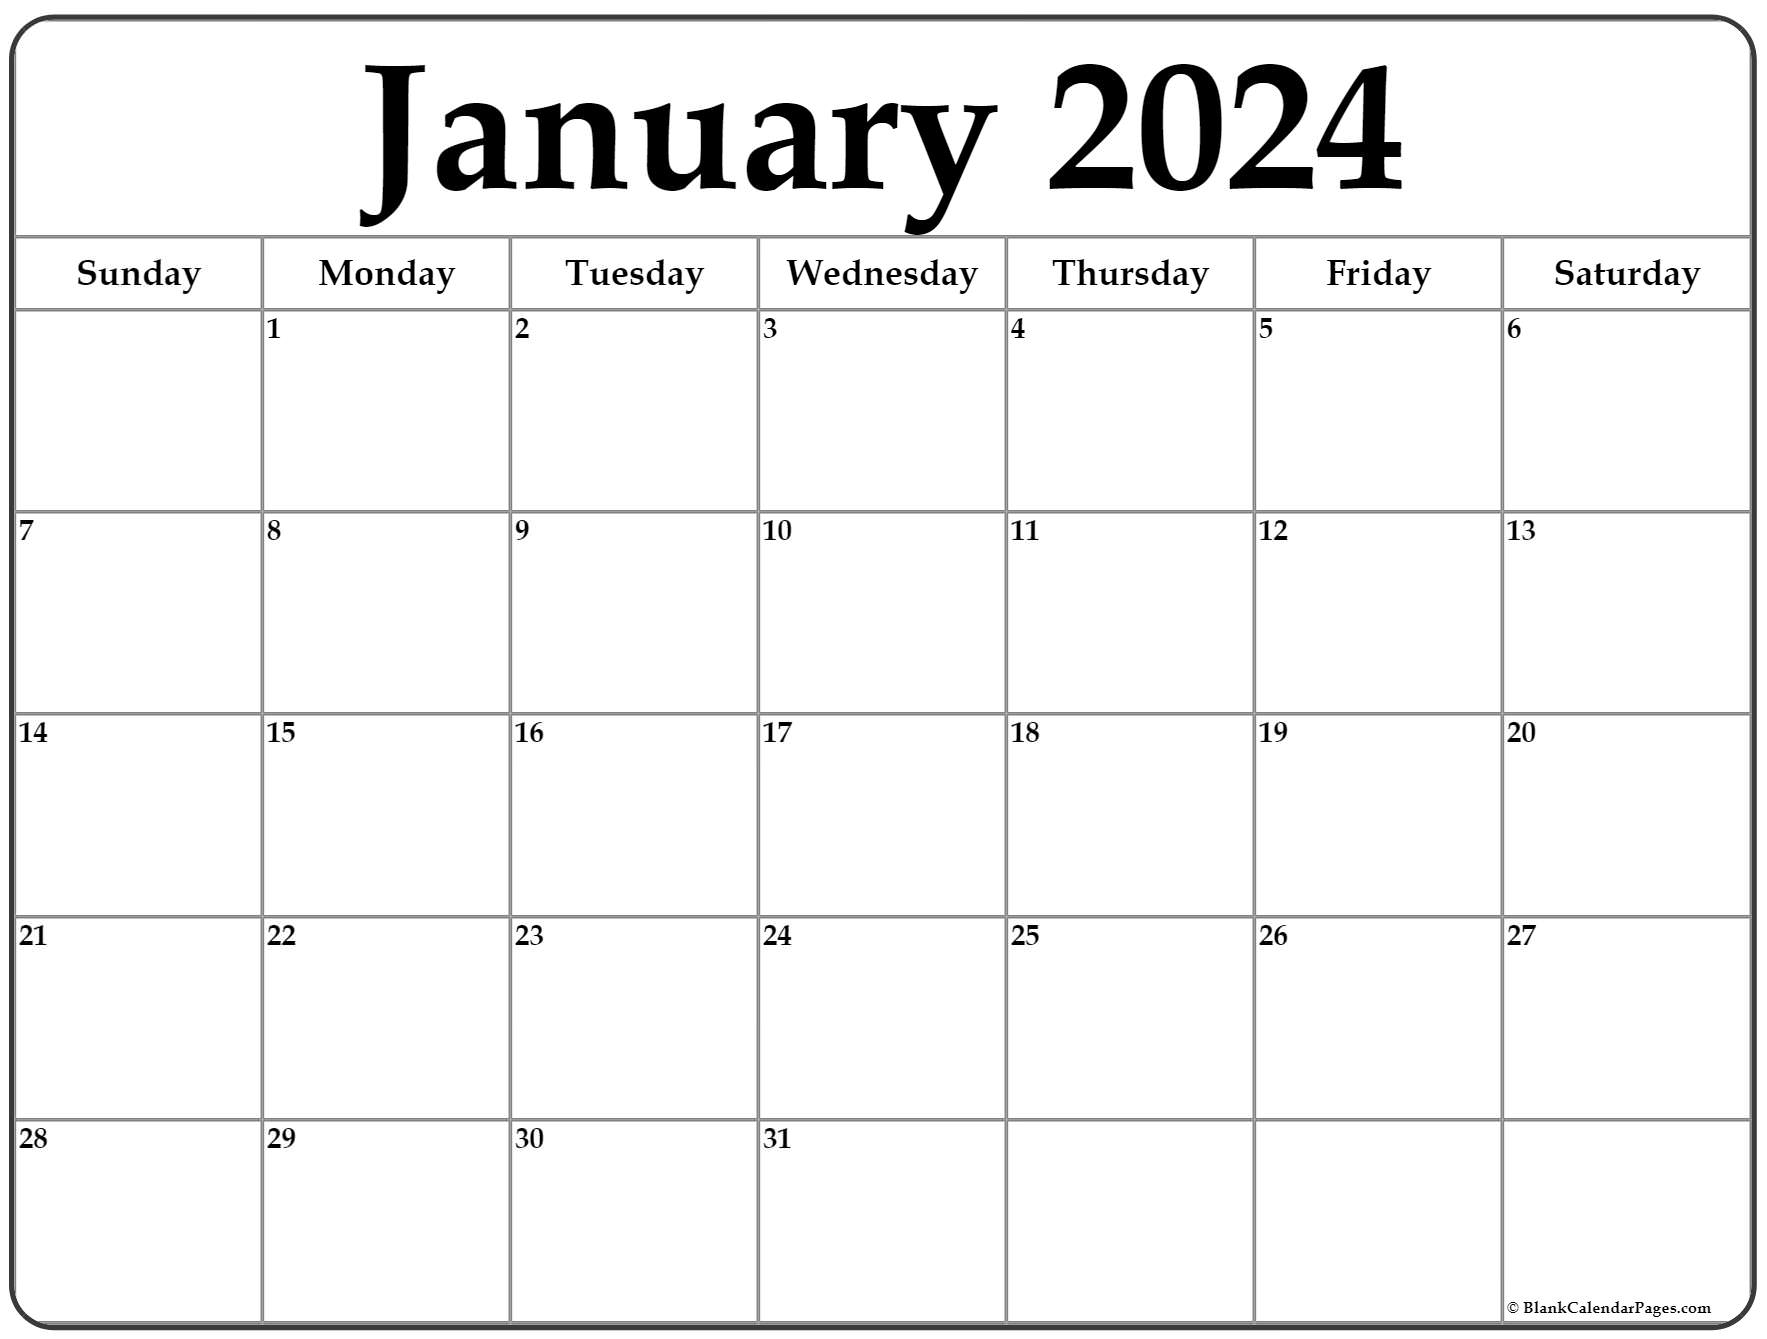 January 2024 Calendar | Free Printable Calendar for 2024 Monthly Printable Calendar